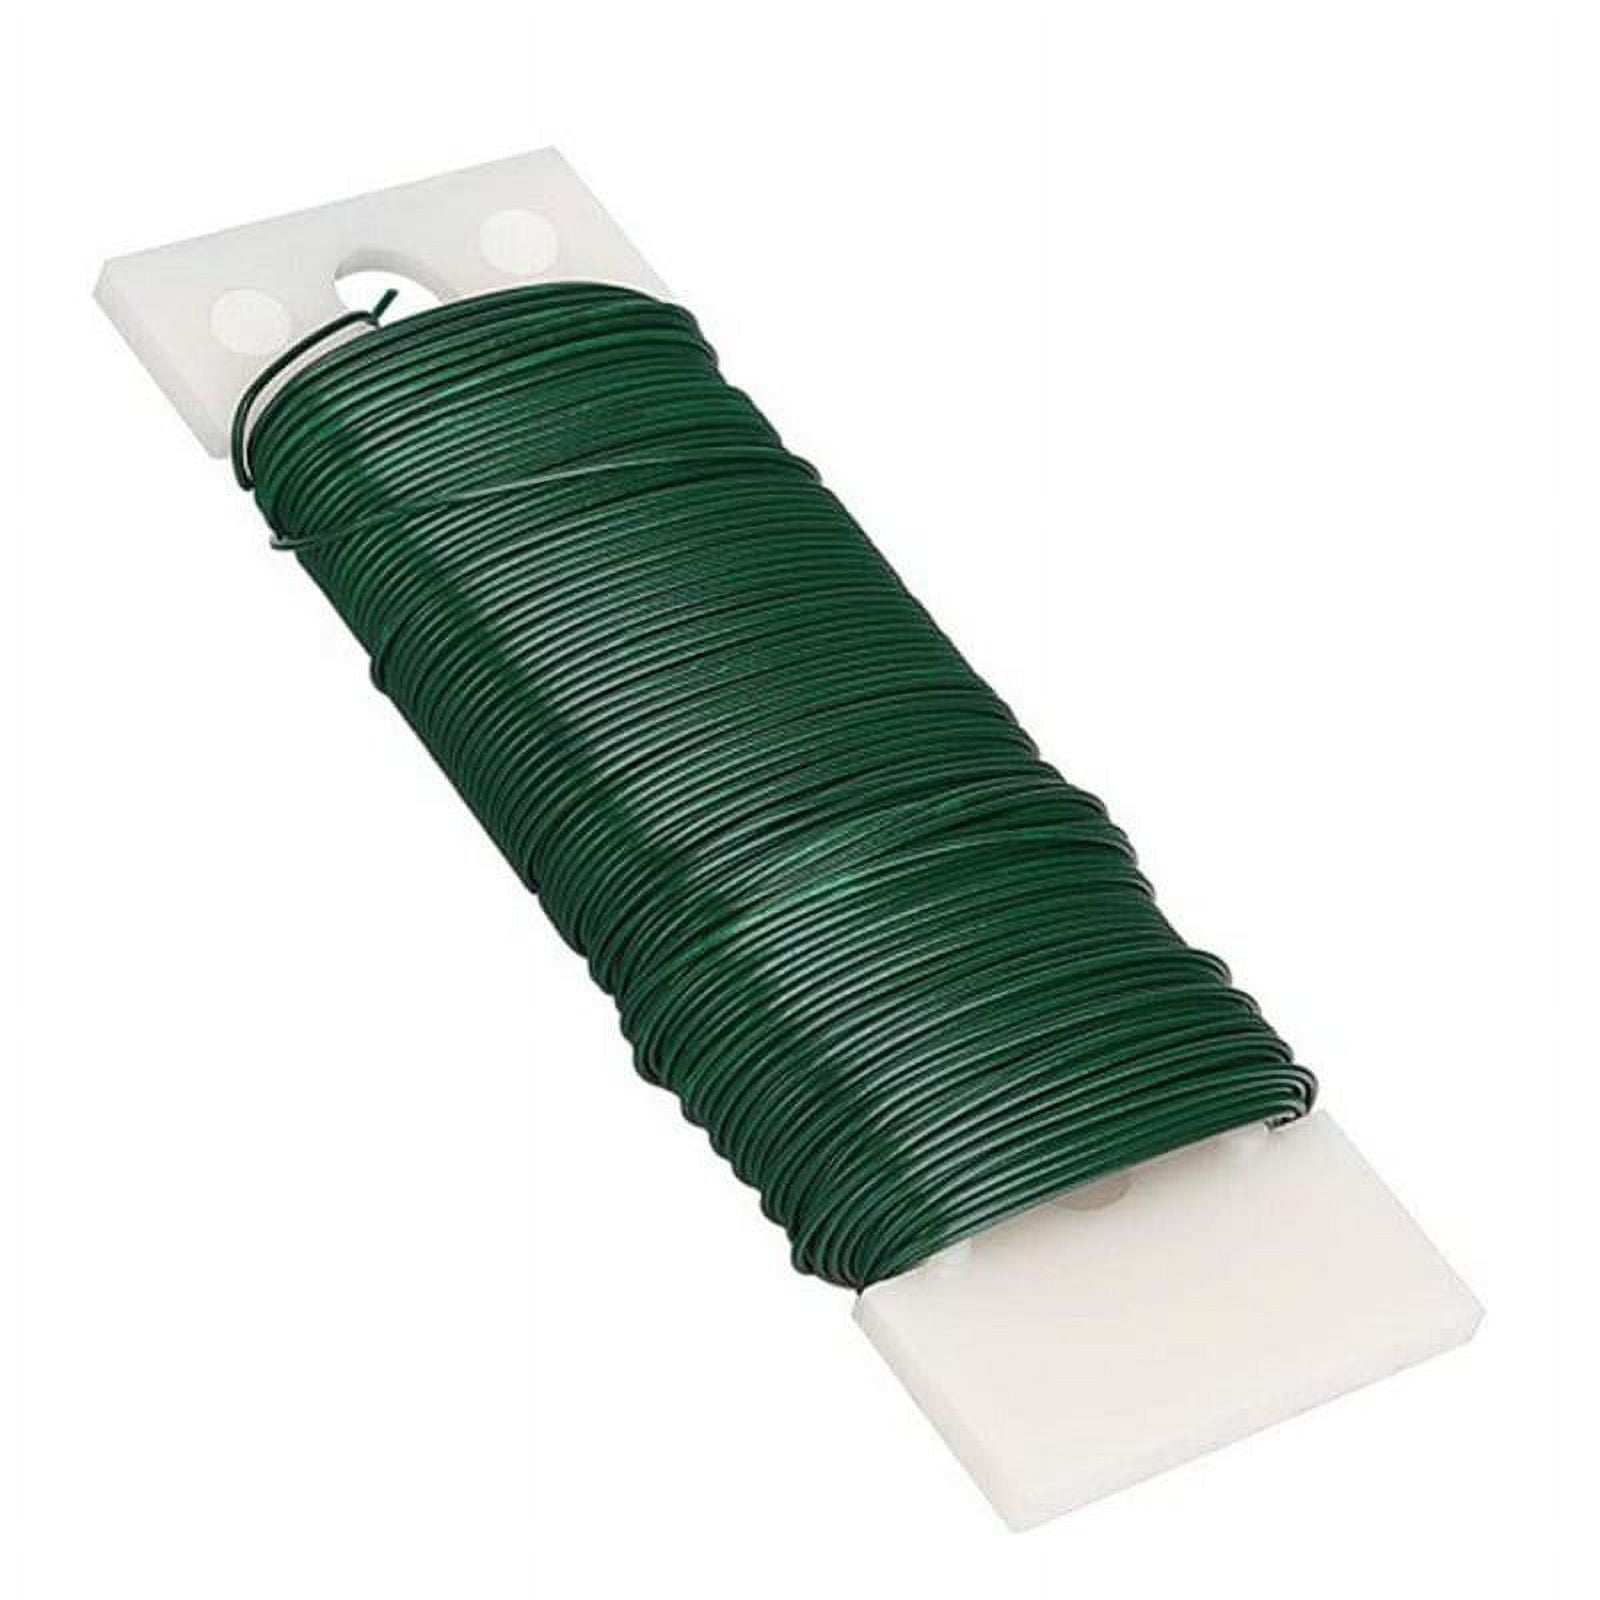 300 Pieces Green 18 Gauge Floral Wire Stems for DIY Crafts, Artificial  Flower Arrangements (16 In)